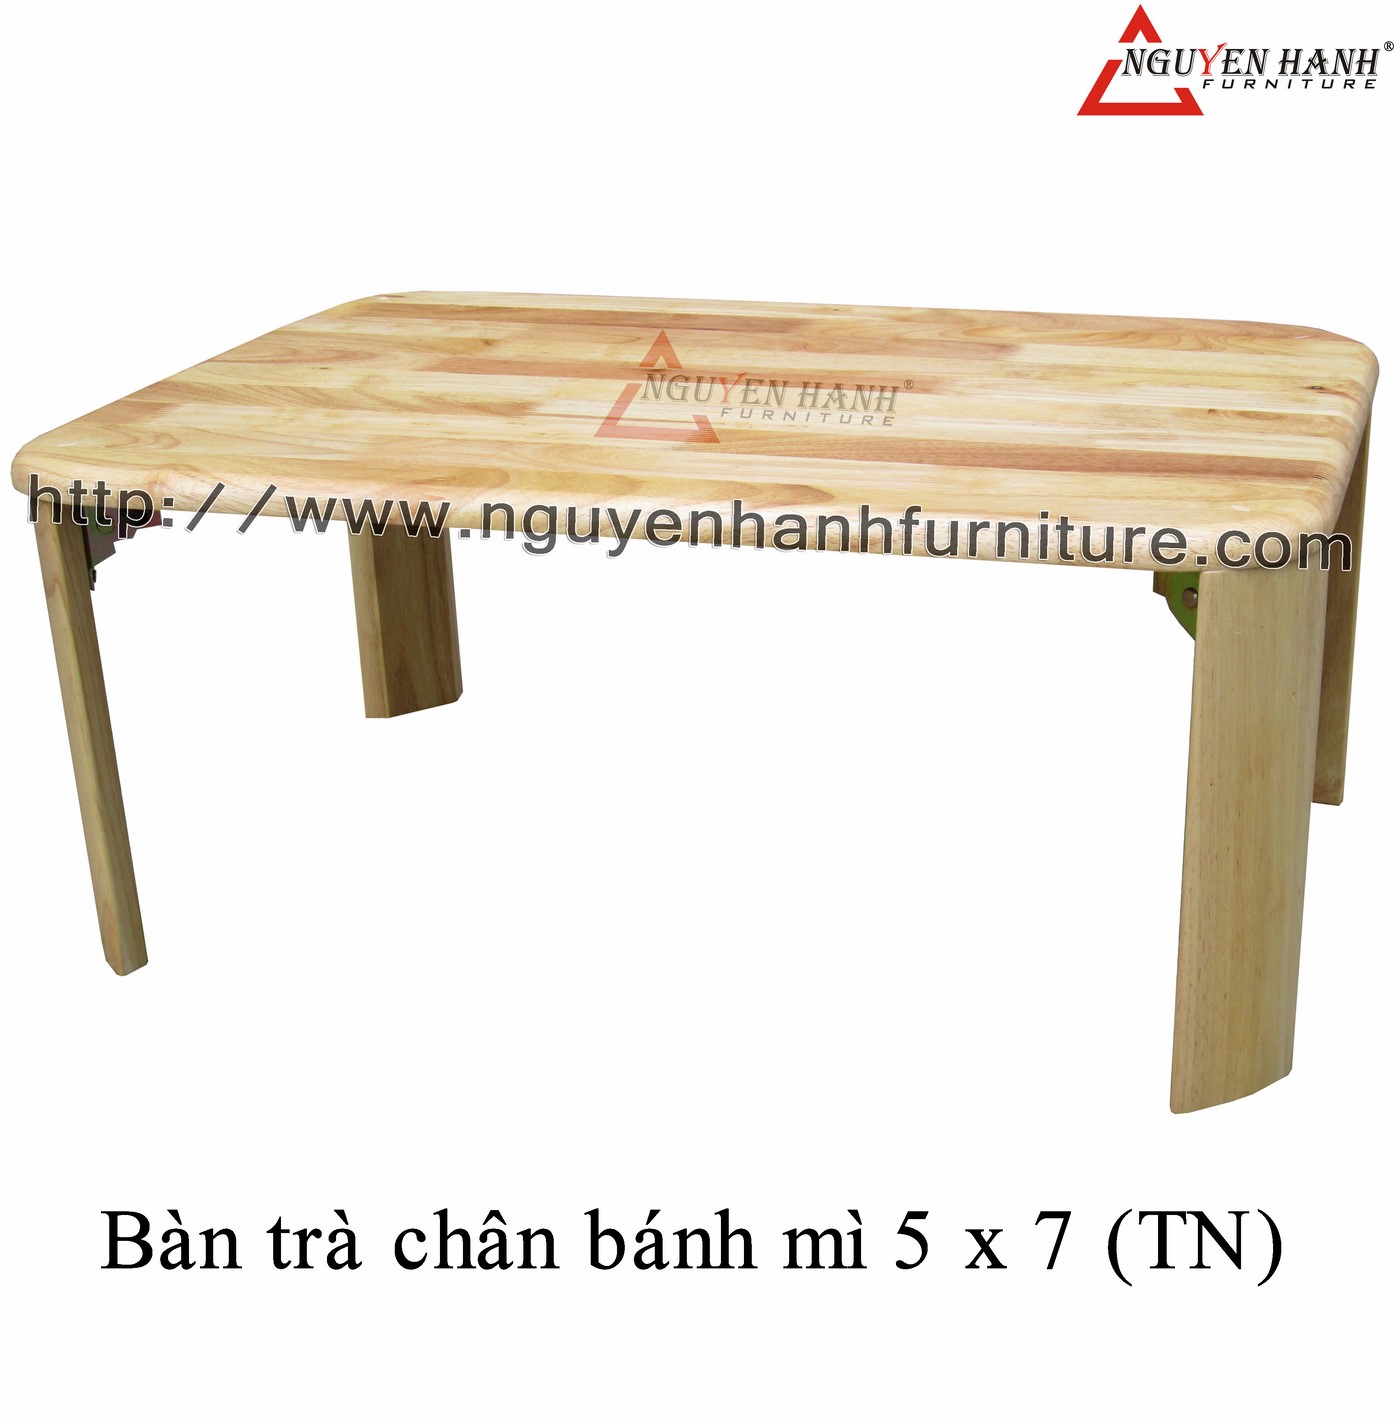 Name product: 5 x 7 Bread shape Tea table (Natural) - Dimensions: 50 x 70 x 30 - Description: Wood natural rubber